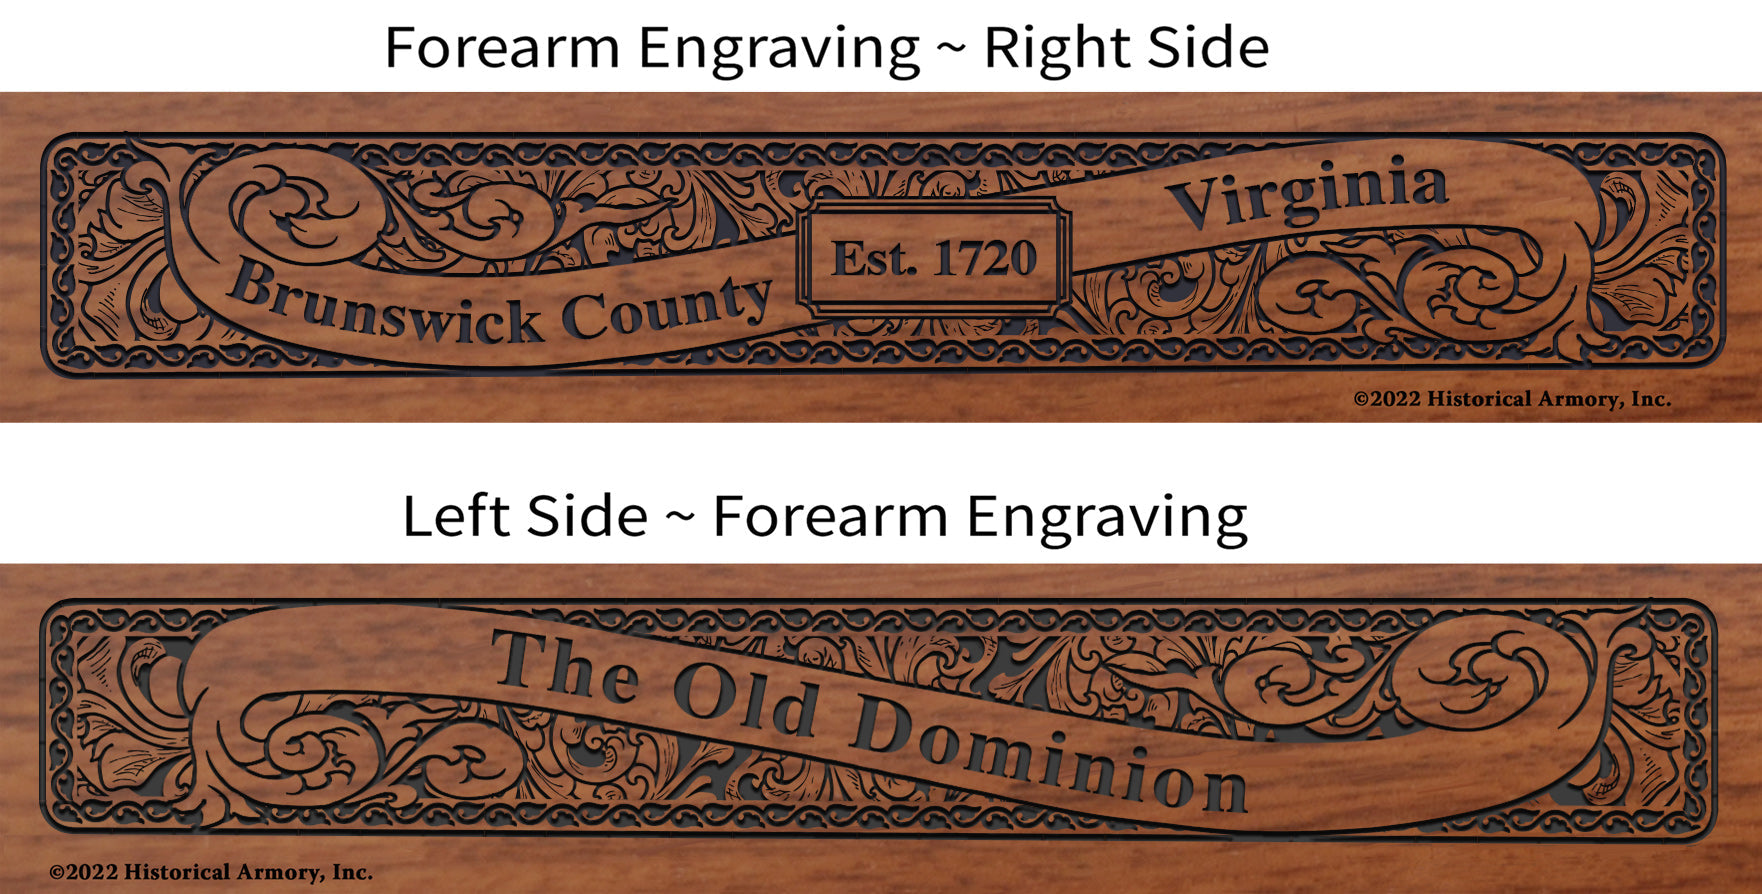 Brunswick County Virginia Engraved Rifle Forearm